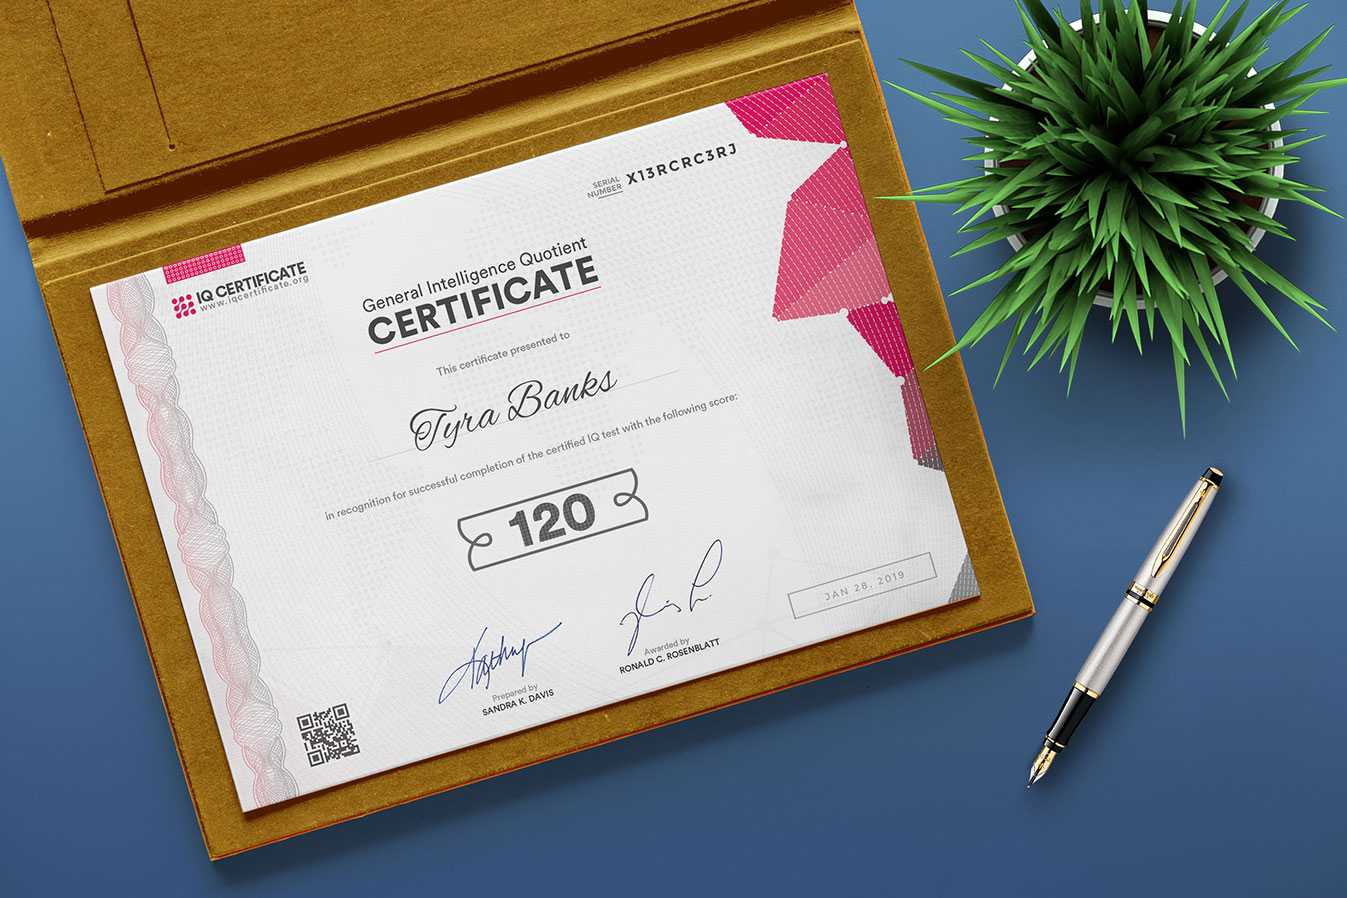 Sample Iq Certificate - Get Your Iq Certificate! Within Iq Certificate Template